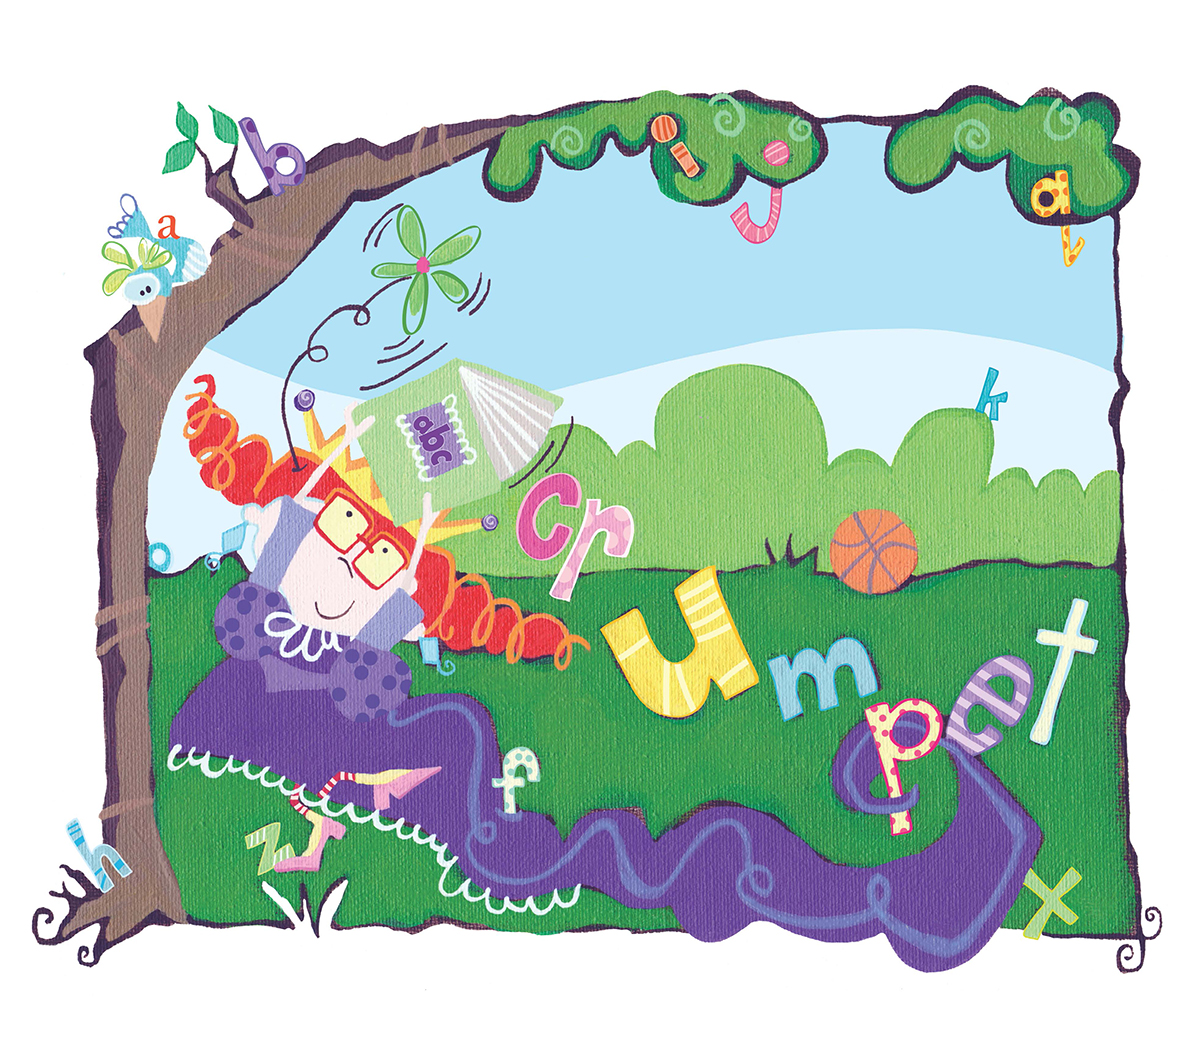 Children's illustration of a little girl under a tree